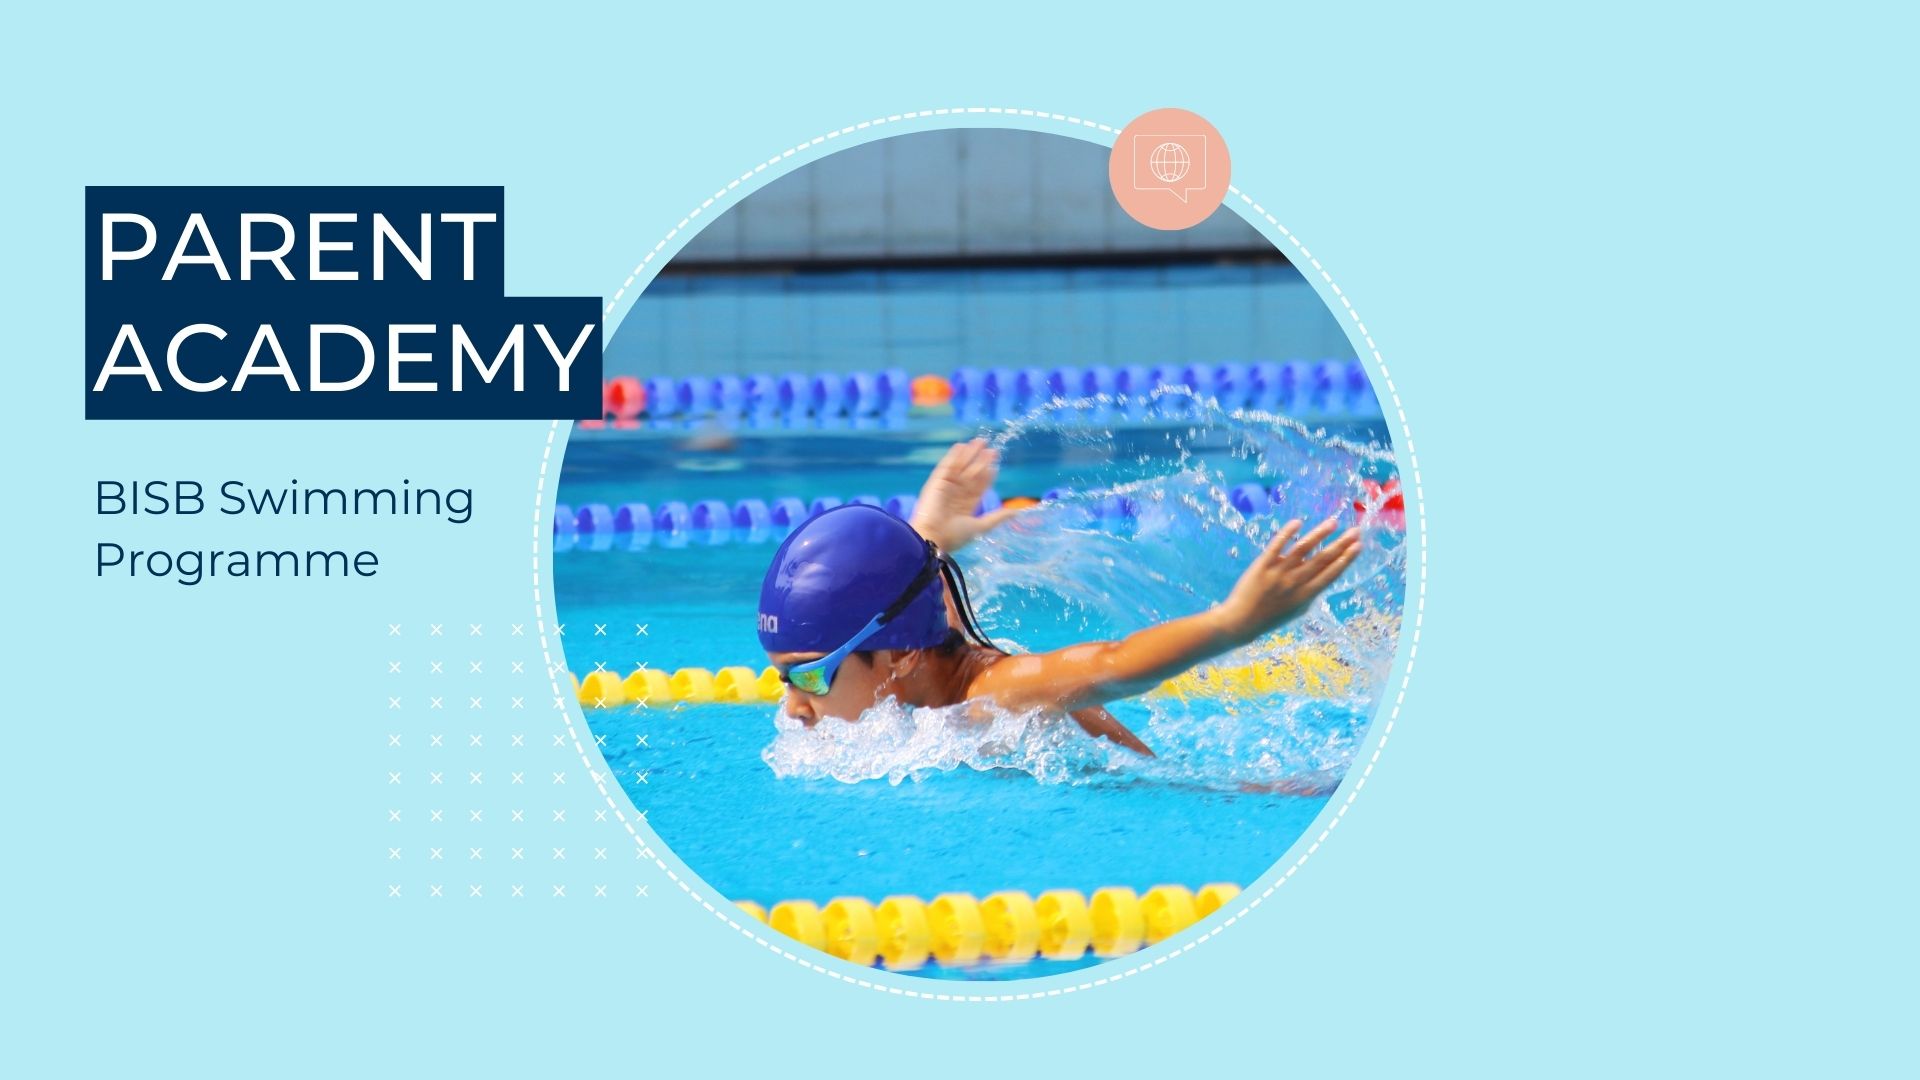 Parent Academy - BISB Swimming Programme - Parent Academy - BISB Swimming Programme